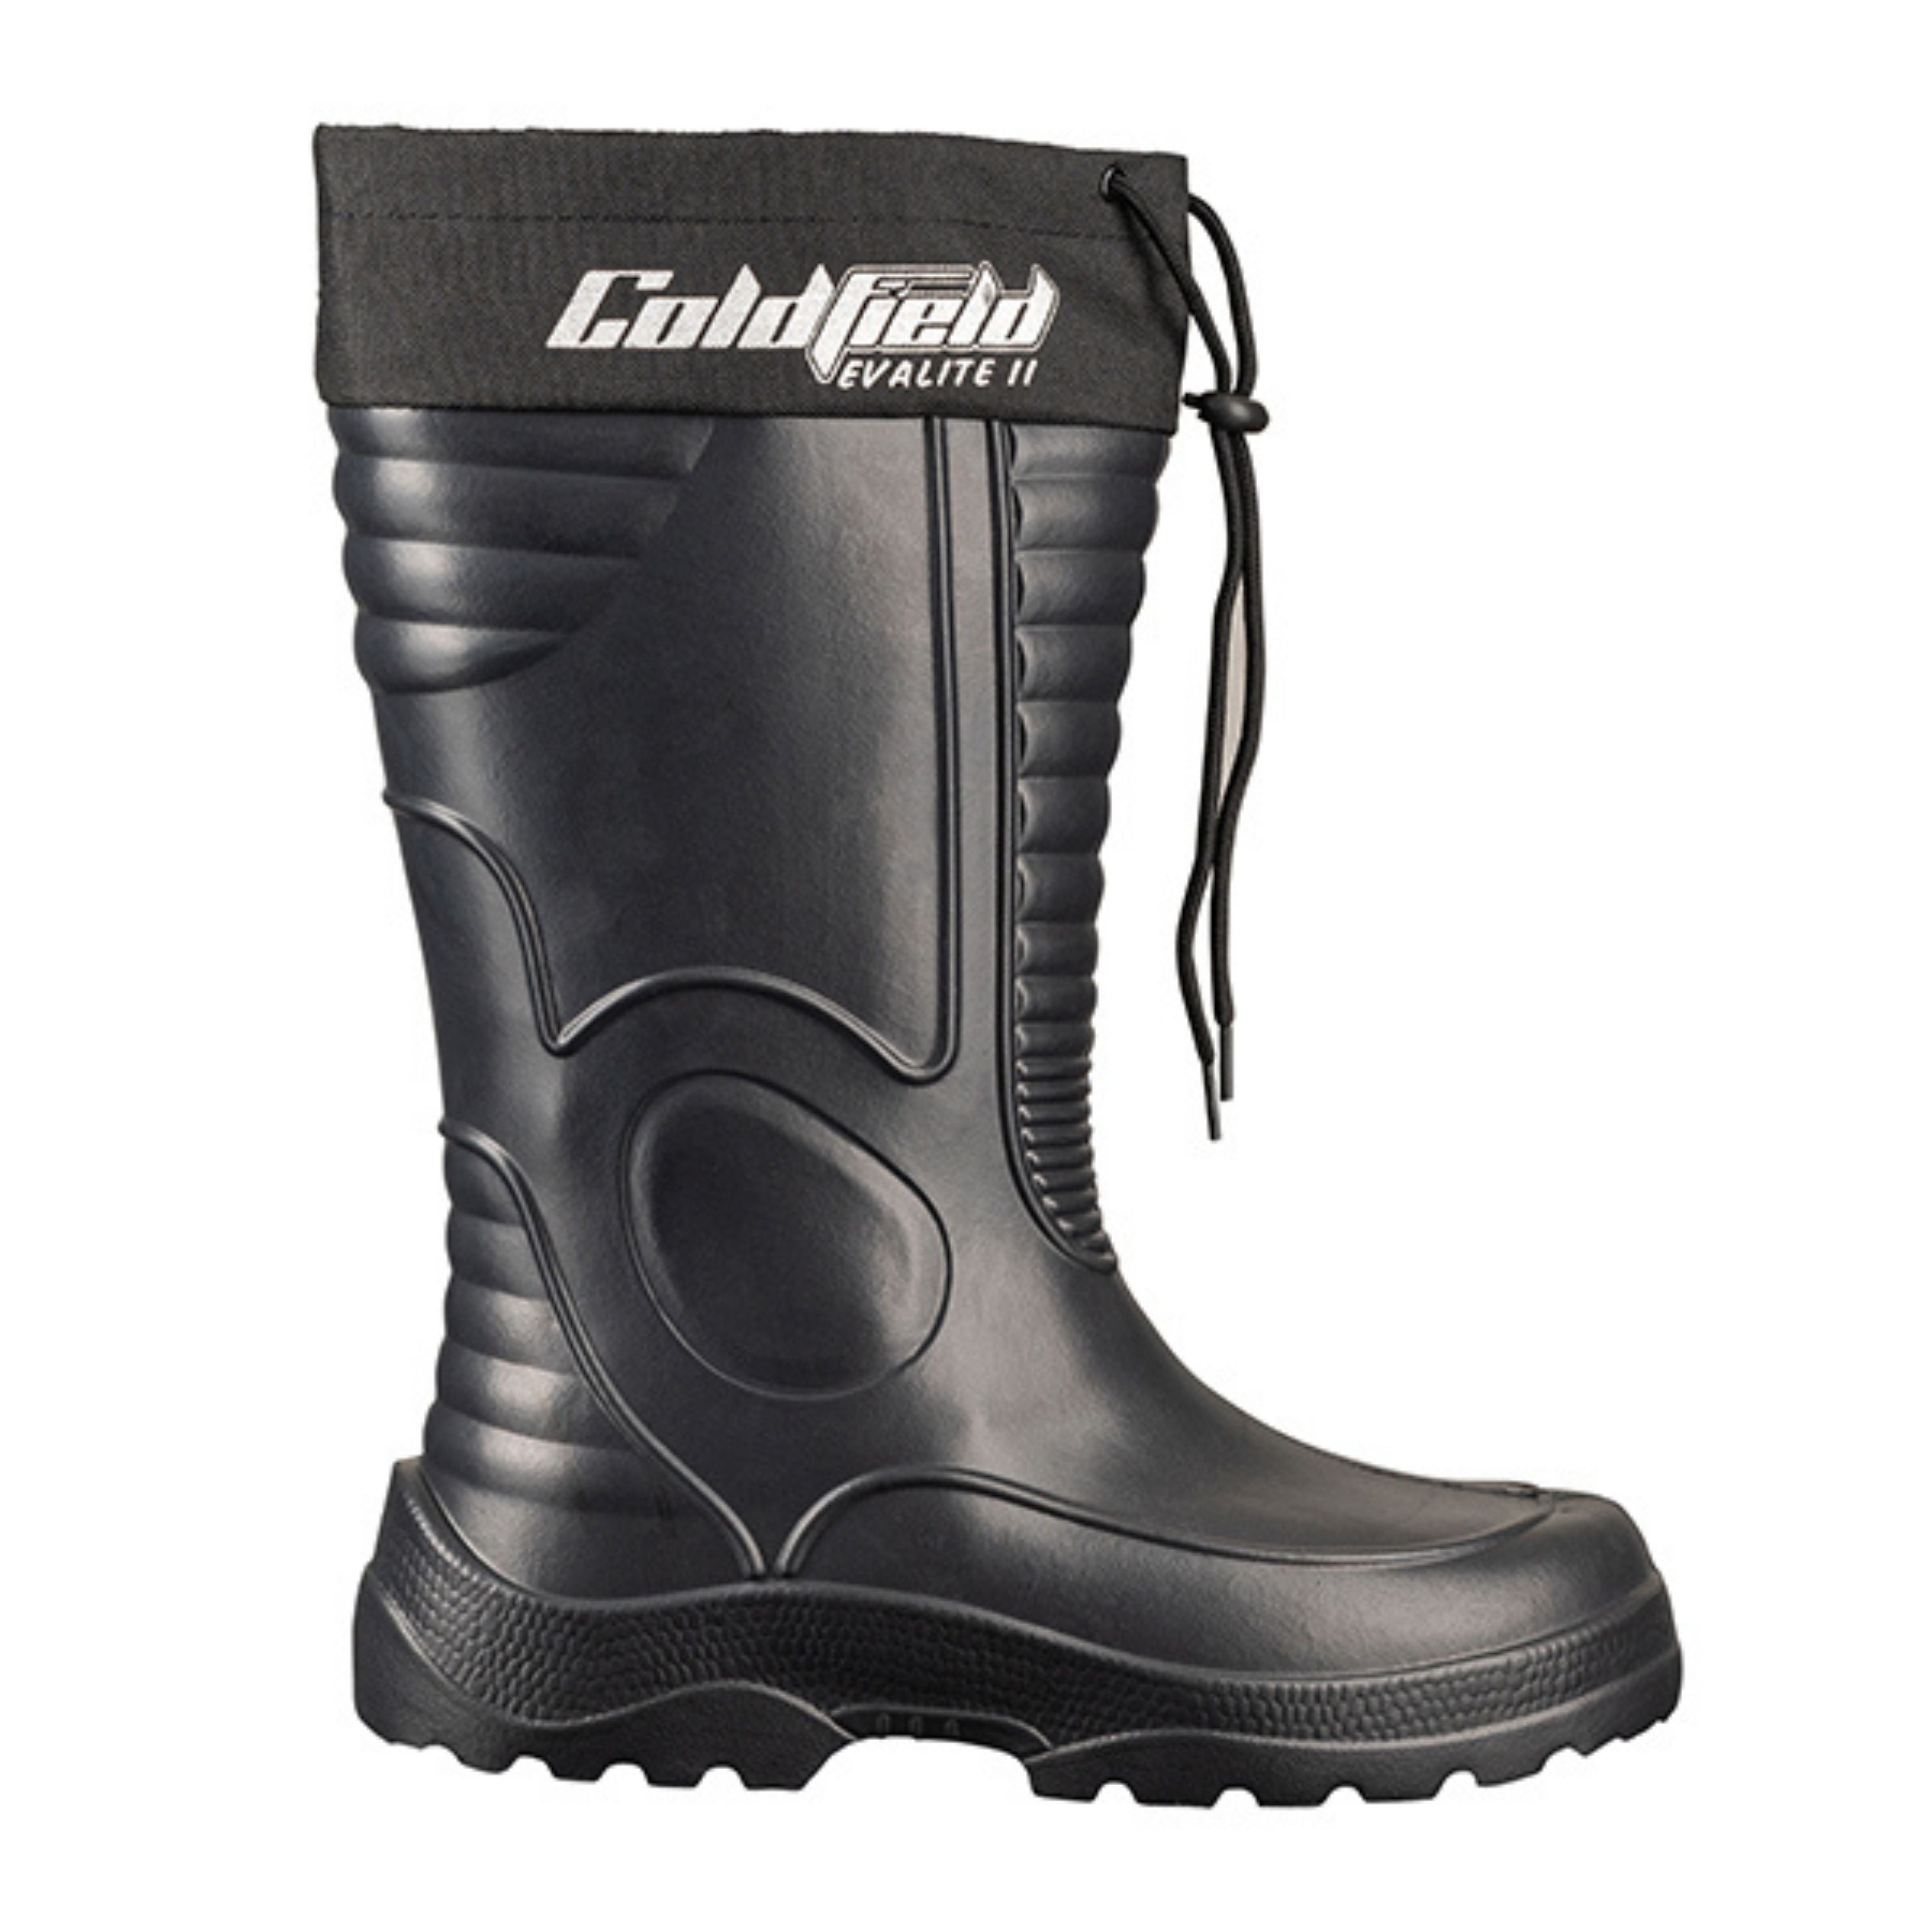 "Evalite II" Insulated boots - Men's